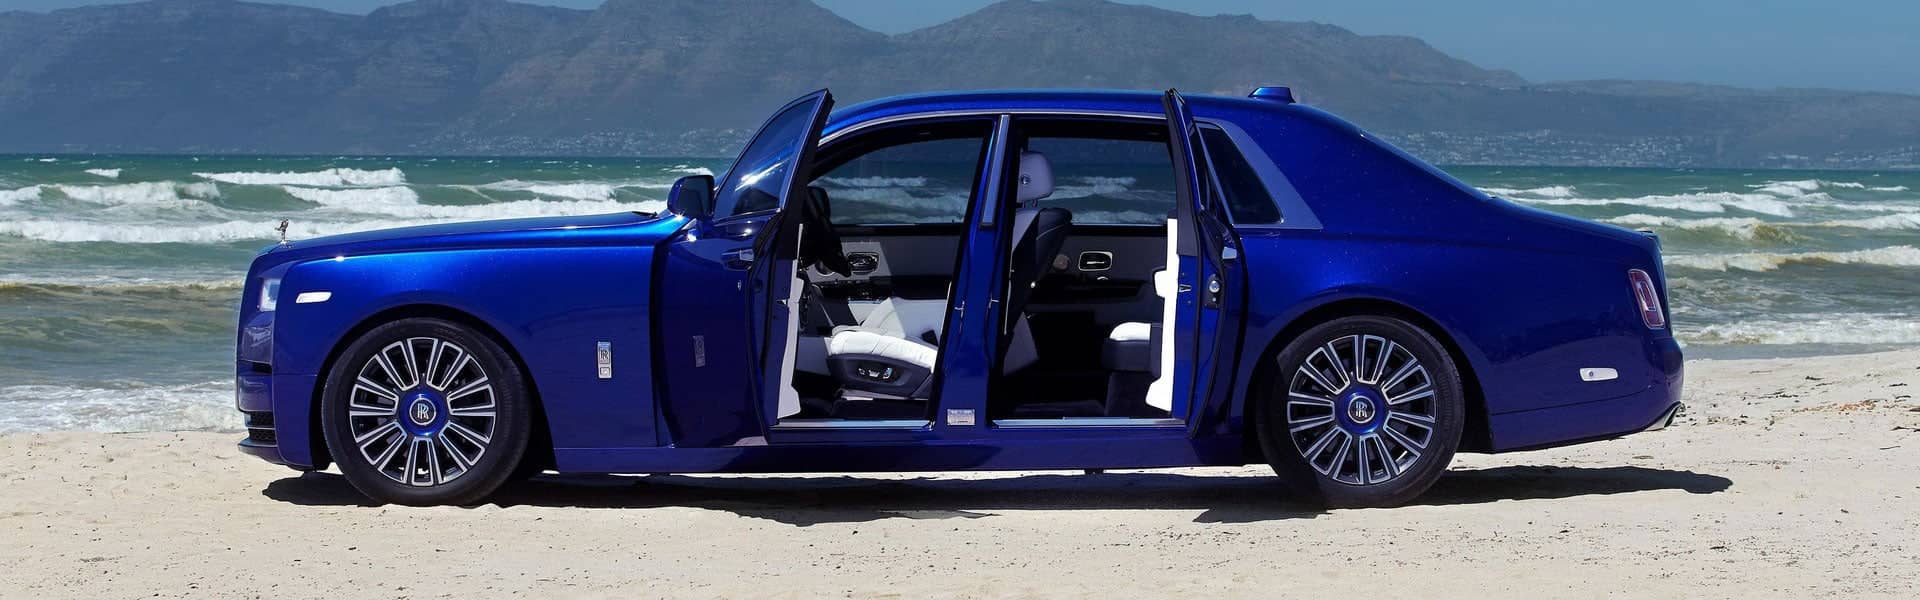 2020 Rolls-Royce Phantom Review